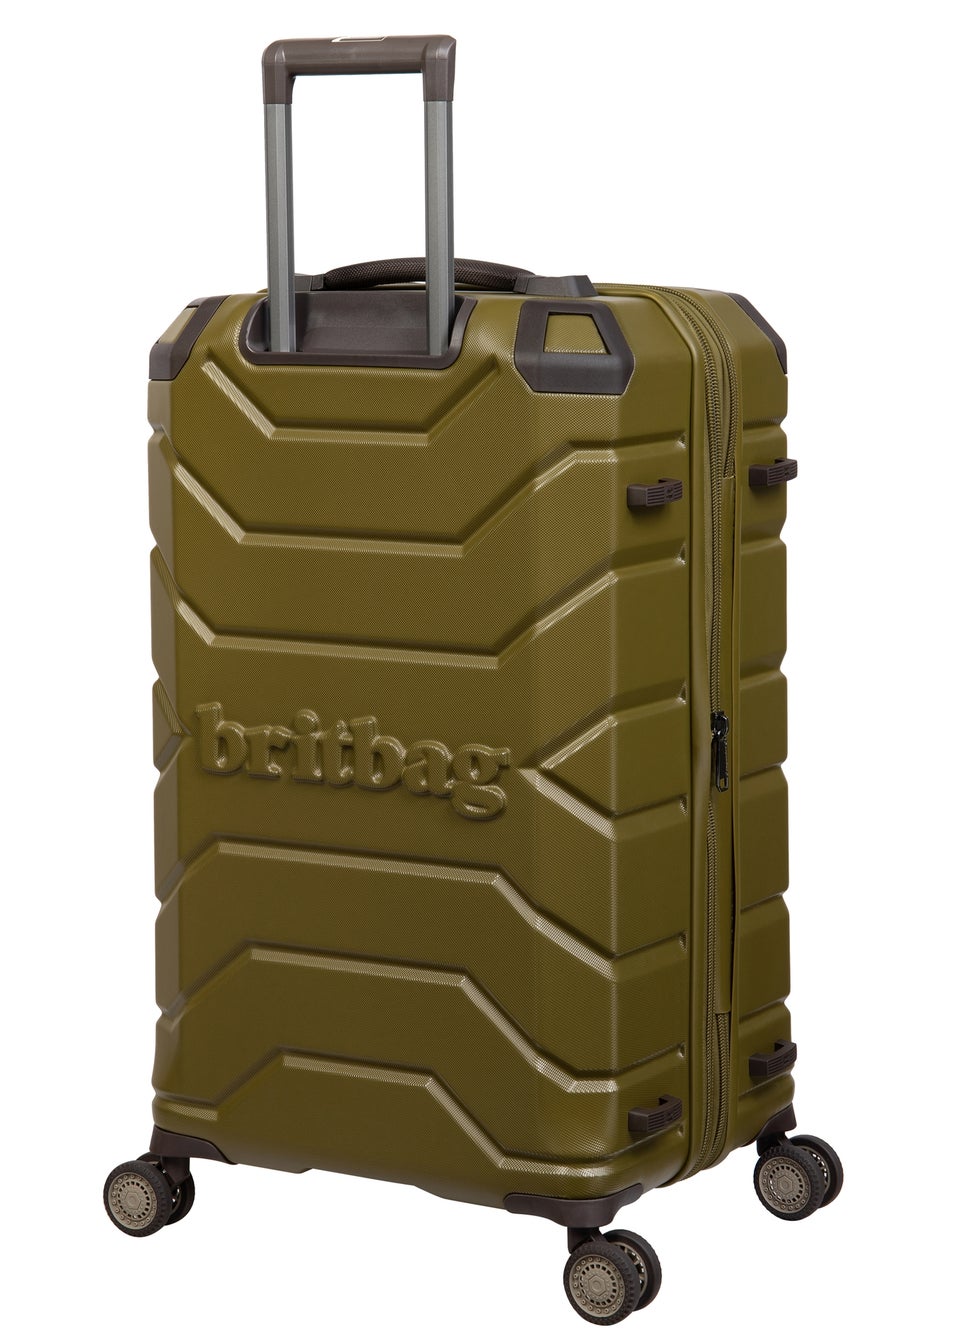 BritBag Galloway Olive Nut Large Suitcase with TSA Lock